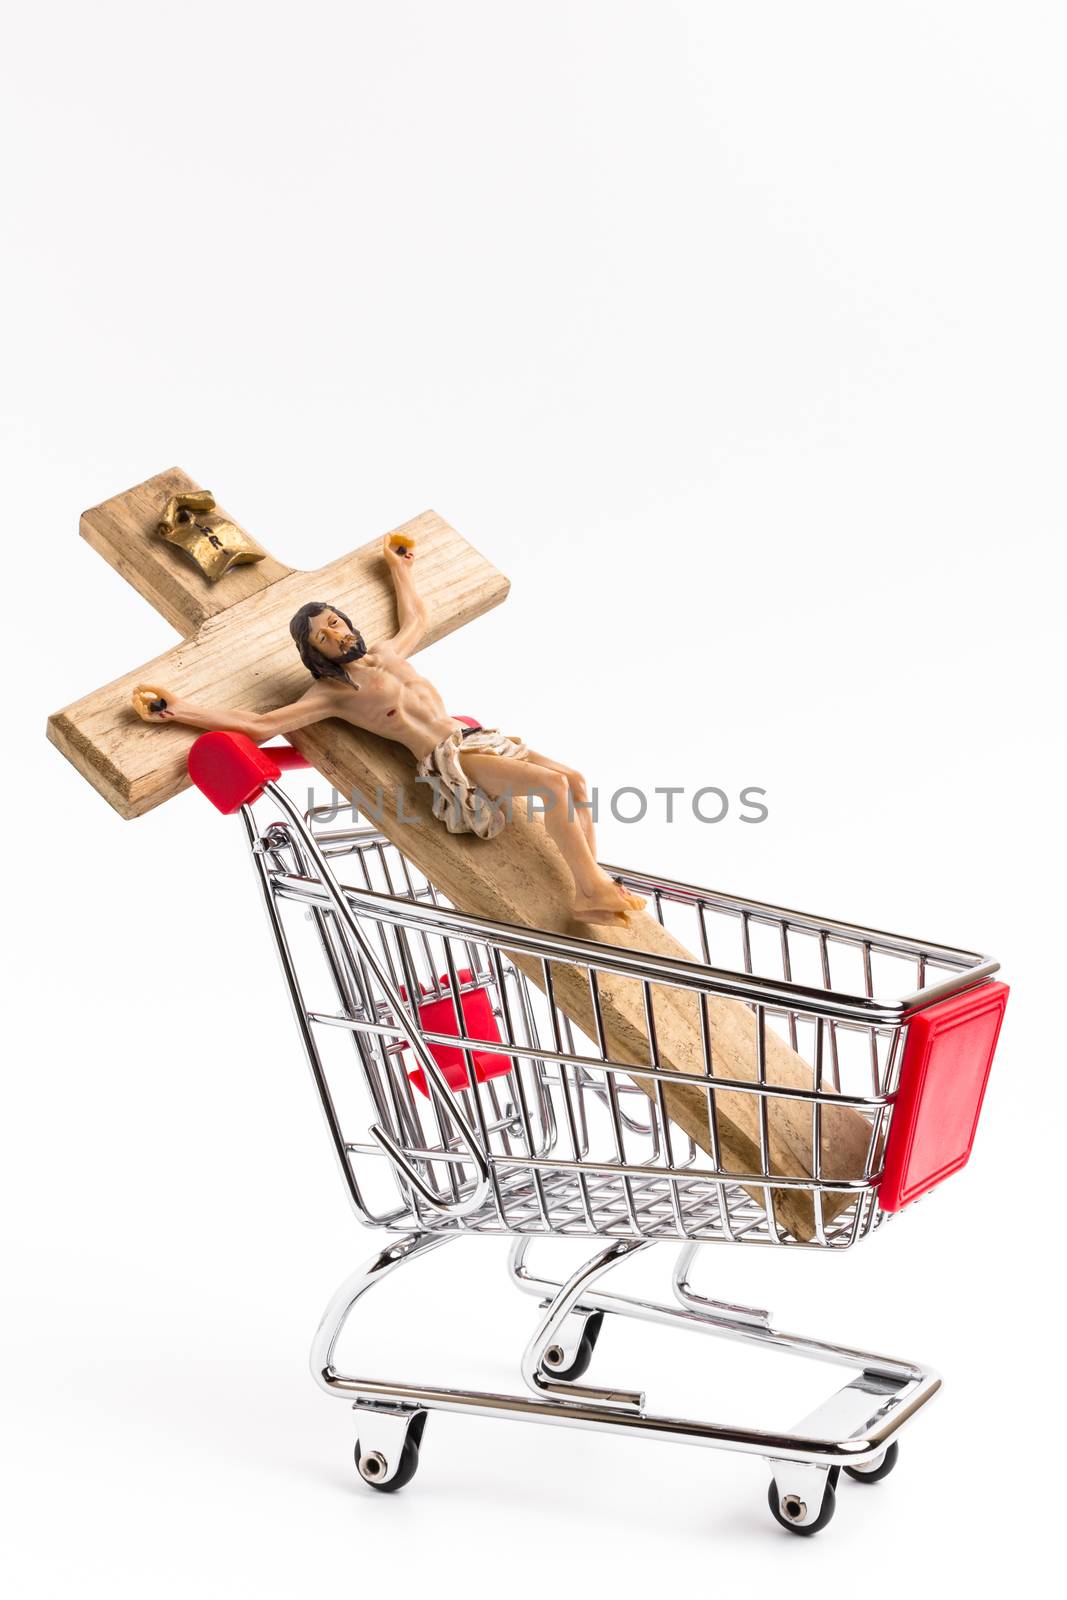 Crucifix in shopping cart by germanopoli